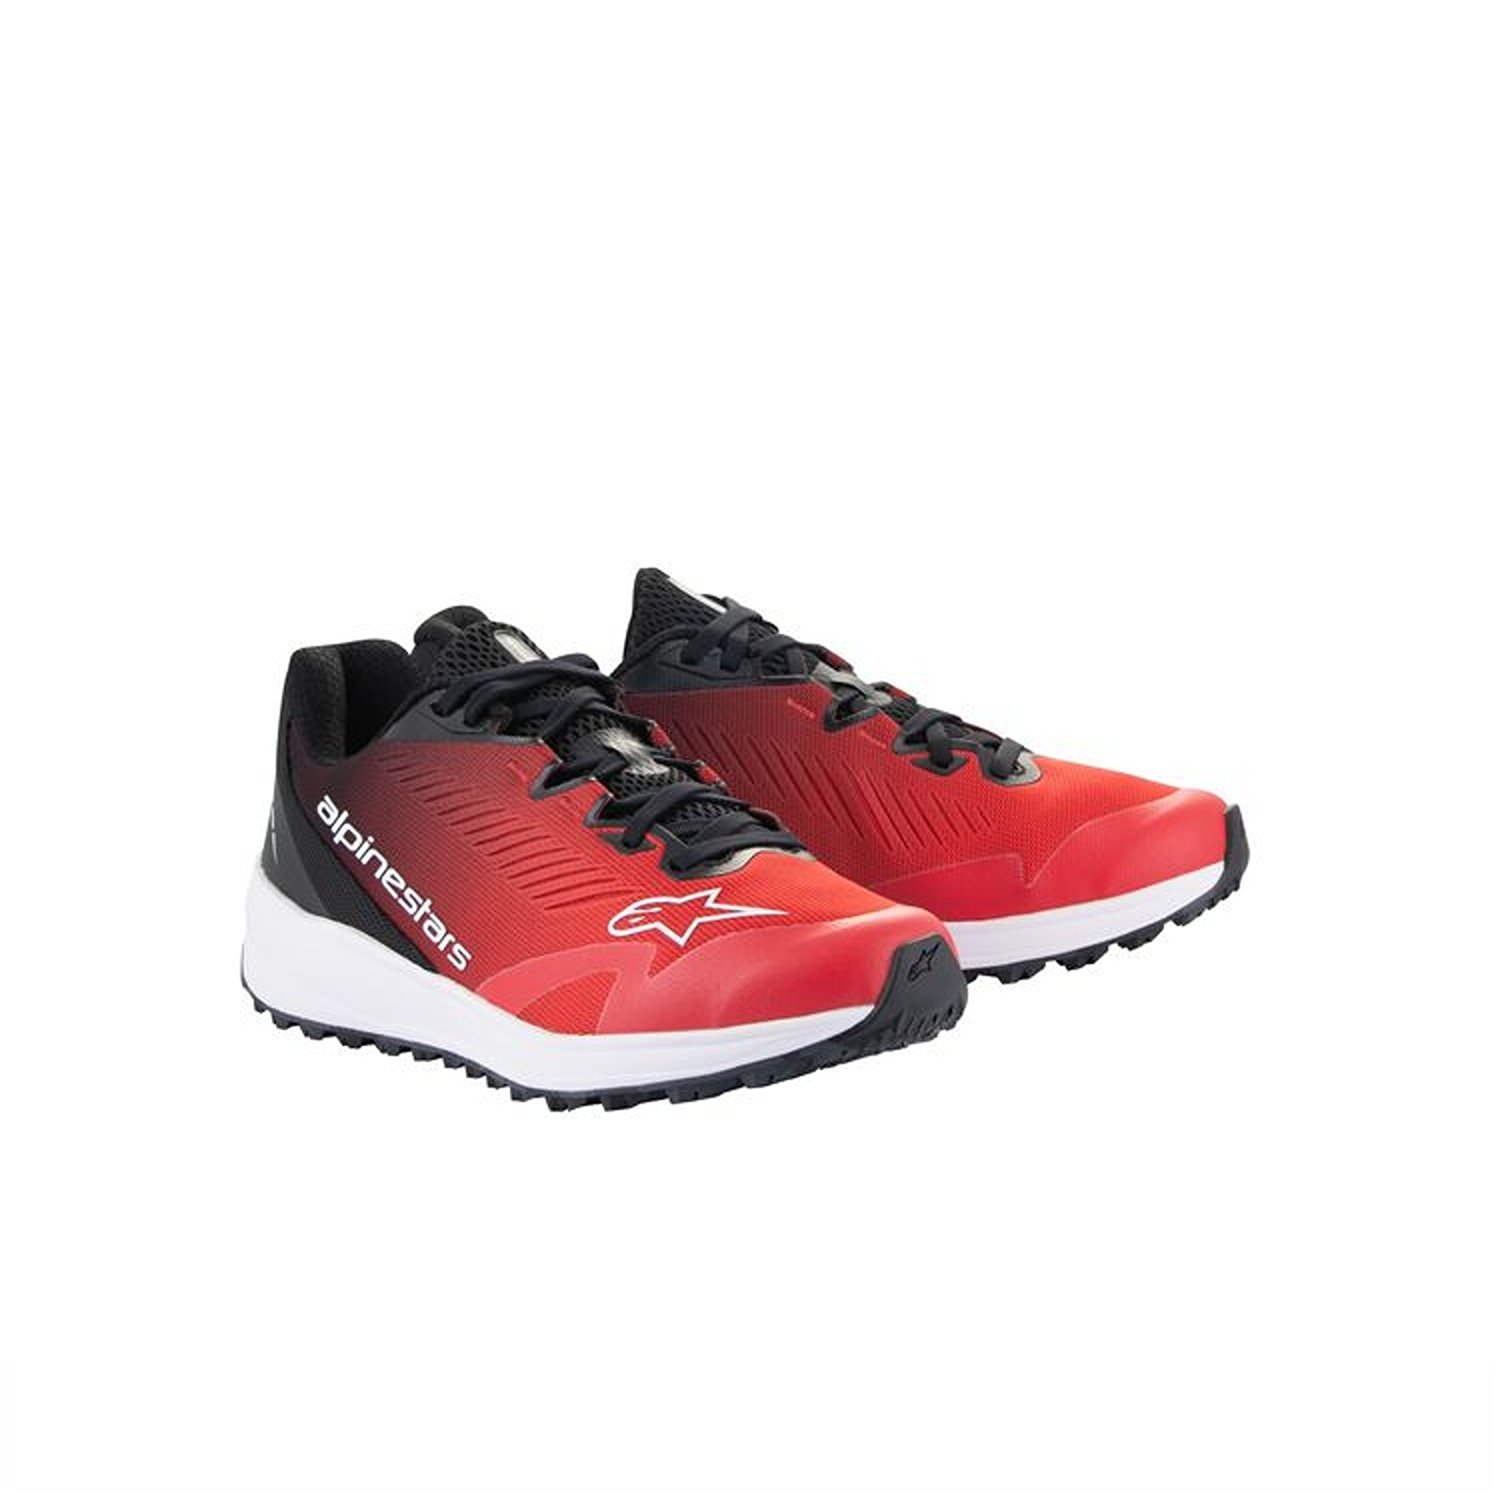 Image of Alpinestars Meta Road V2 Shoes Red Black White Talla US 6